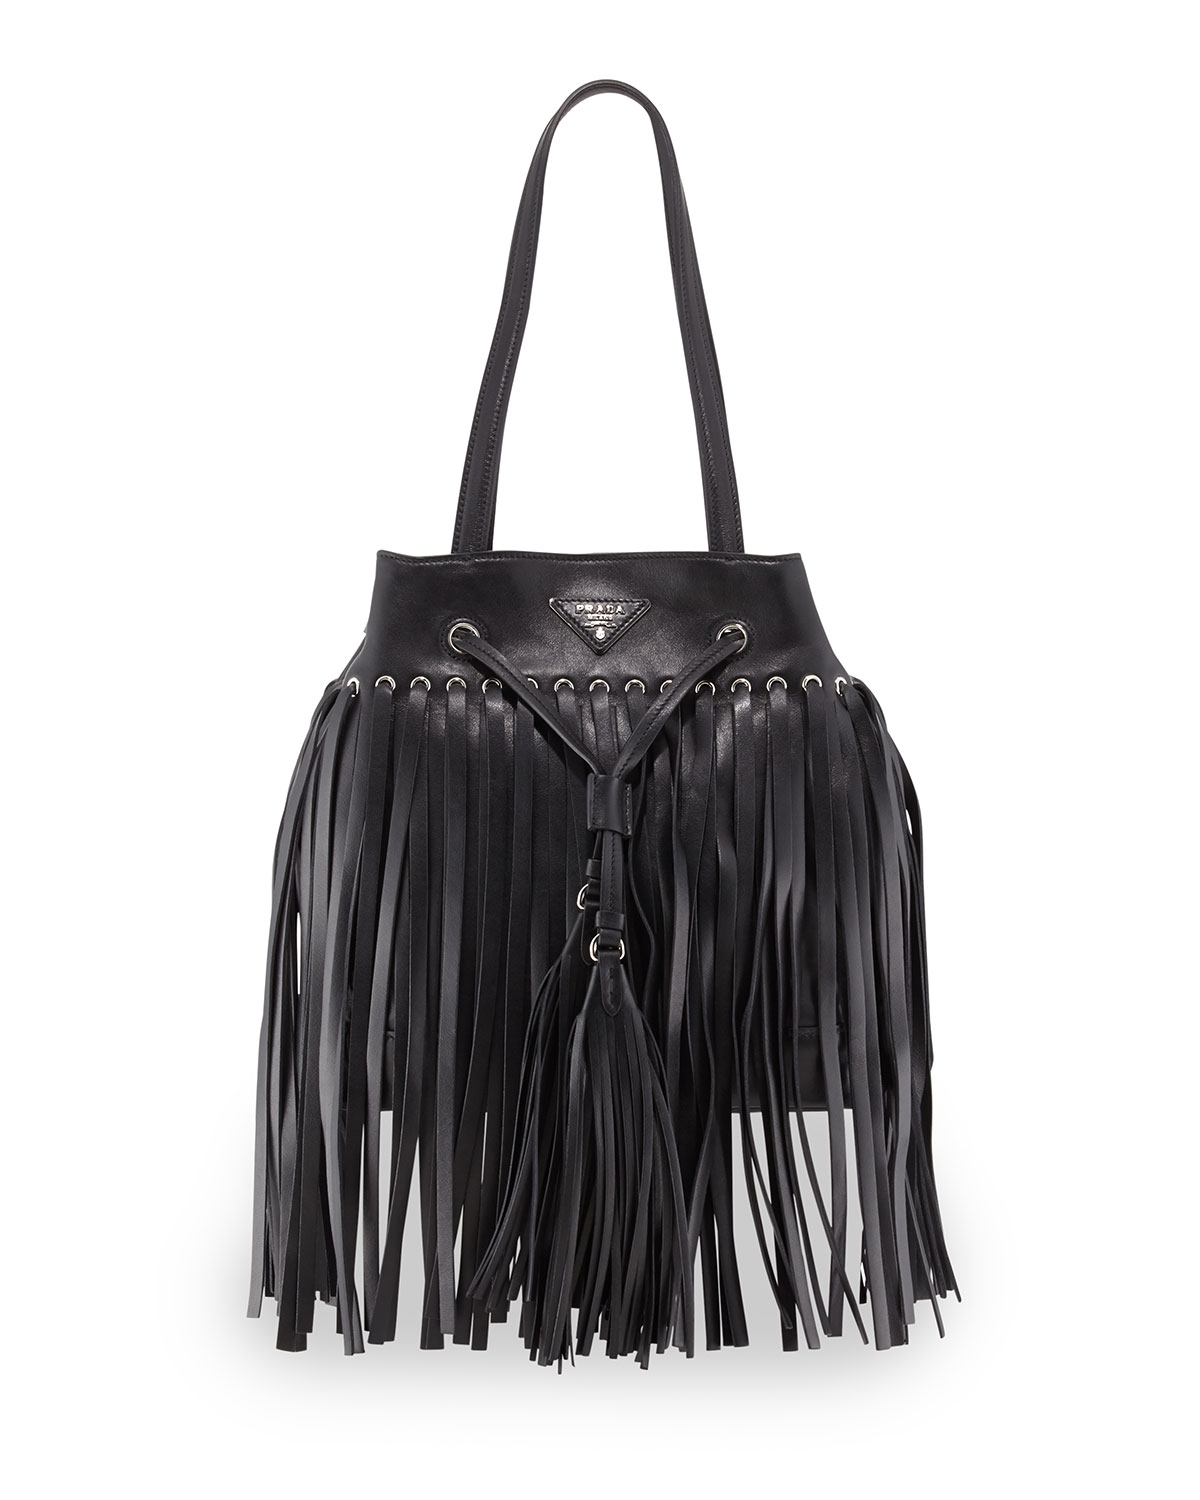 Lyst - Prada Soft Calf Leather Fringe Bucket Bag in Black